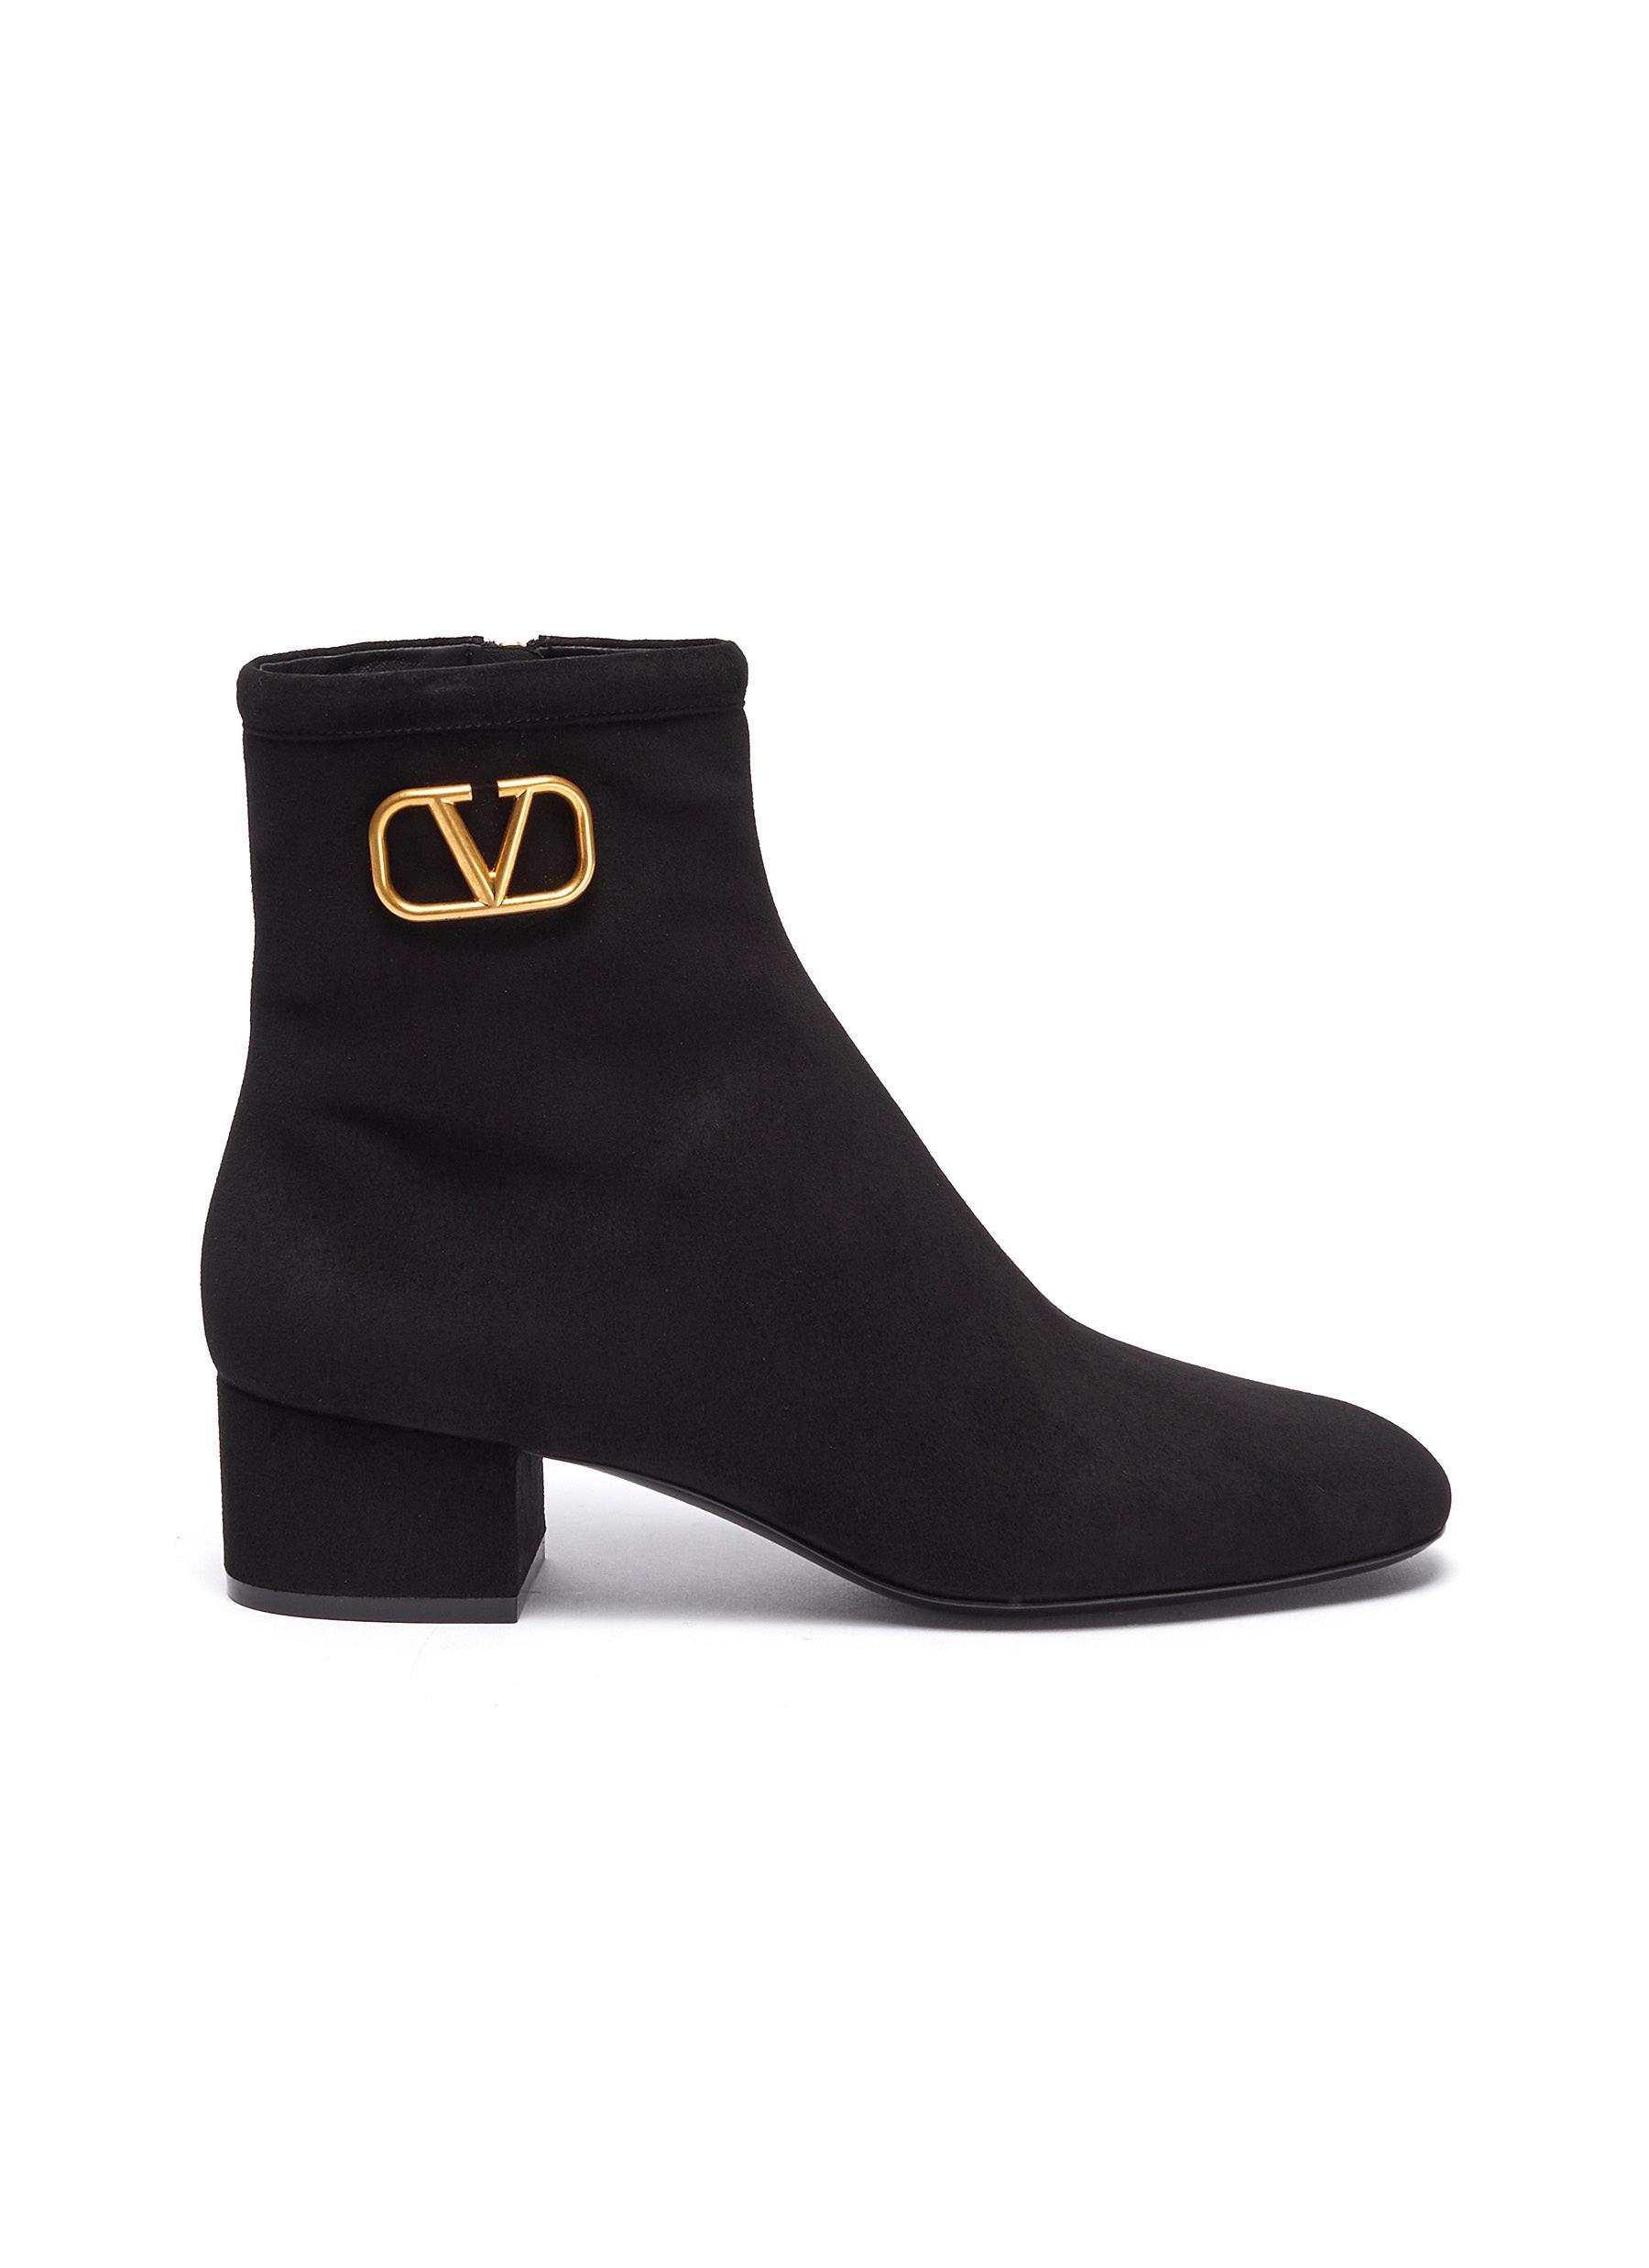 Valentino Garavani V-logo Suede Ankle Boots | Lyst